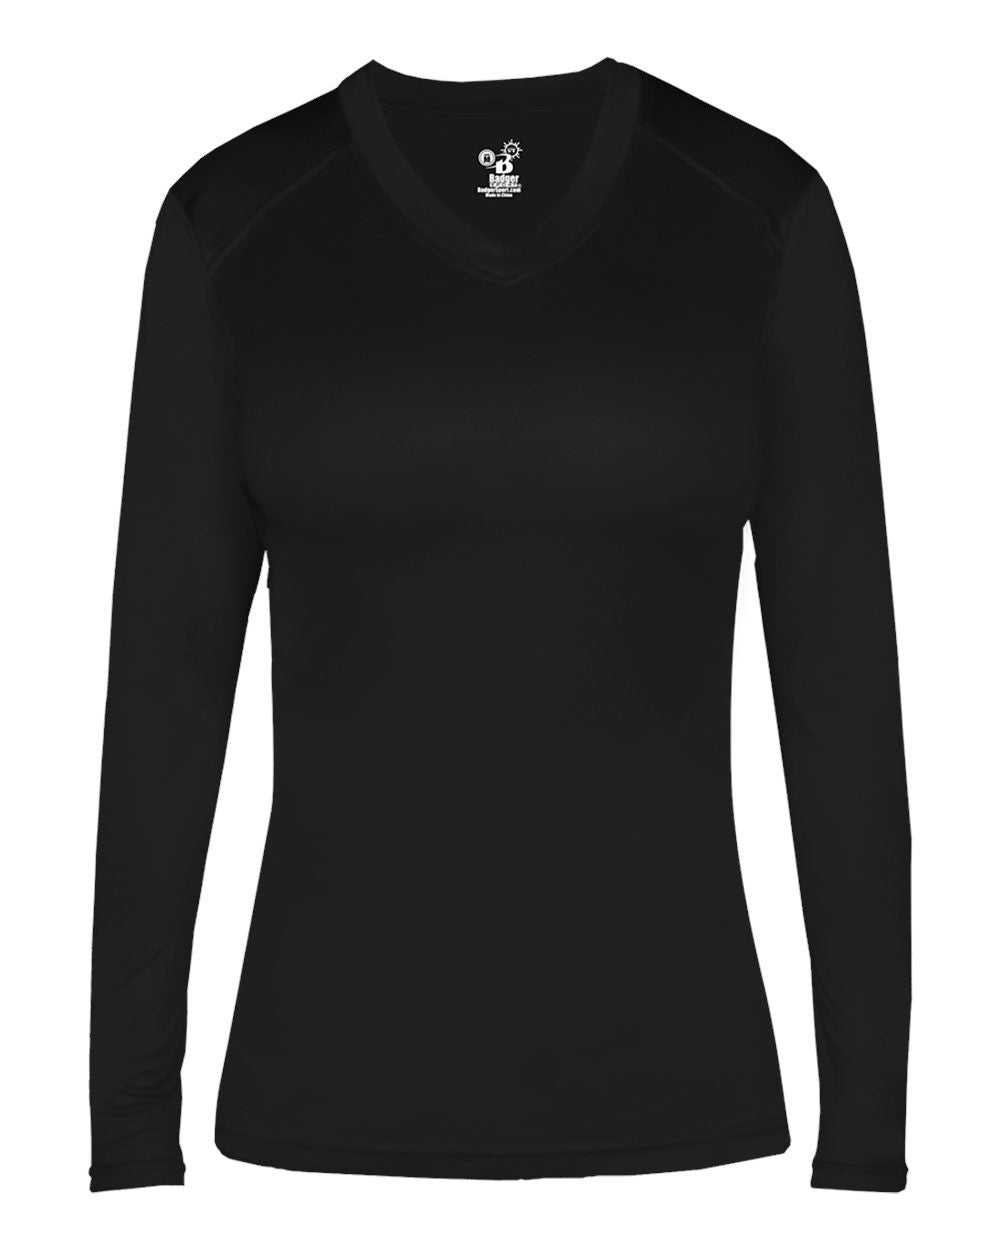 Badger Sport 6464 Ultimate Softlock Fitted Ladies Long Sleeve Tee - Black - HIT a Double - 1